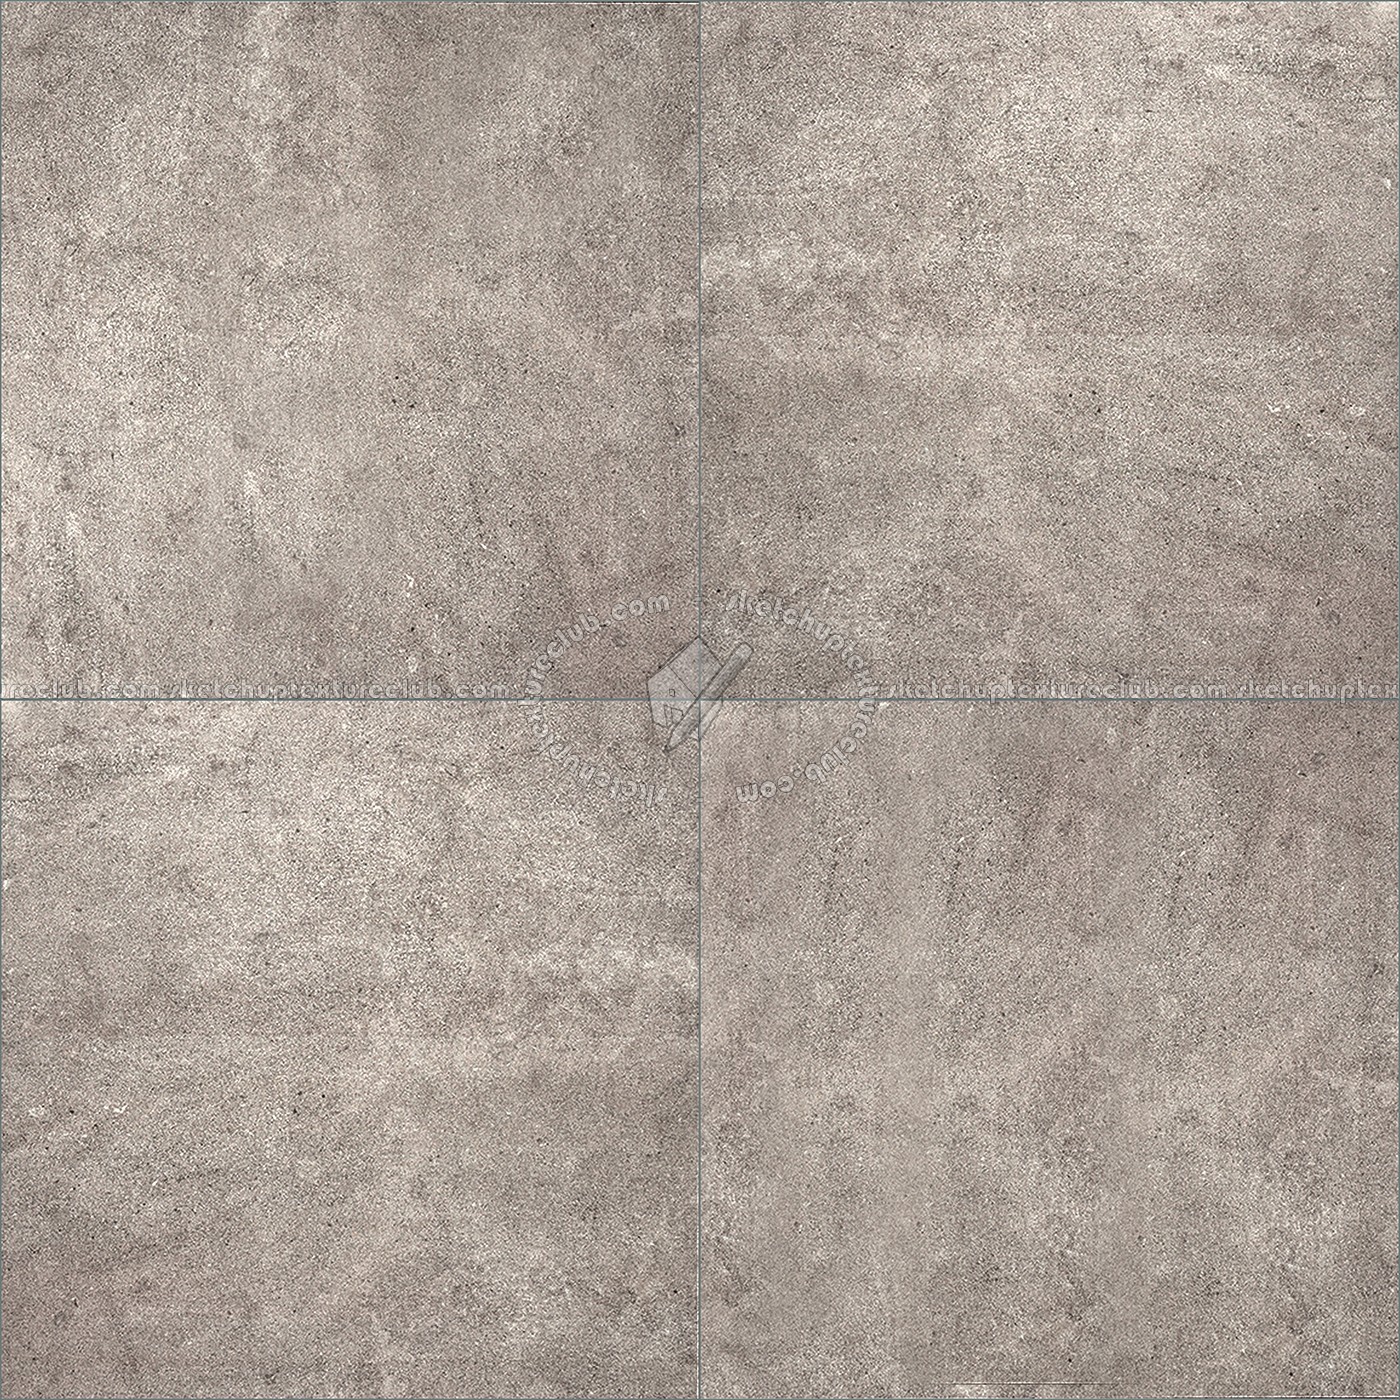 Square sandstone tile cm 100x100 texture seamless 15970